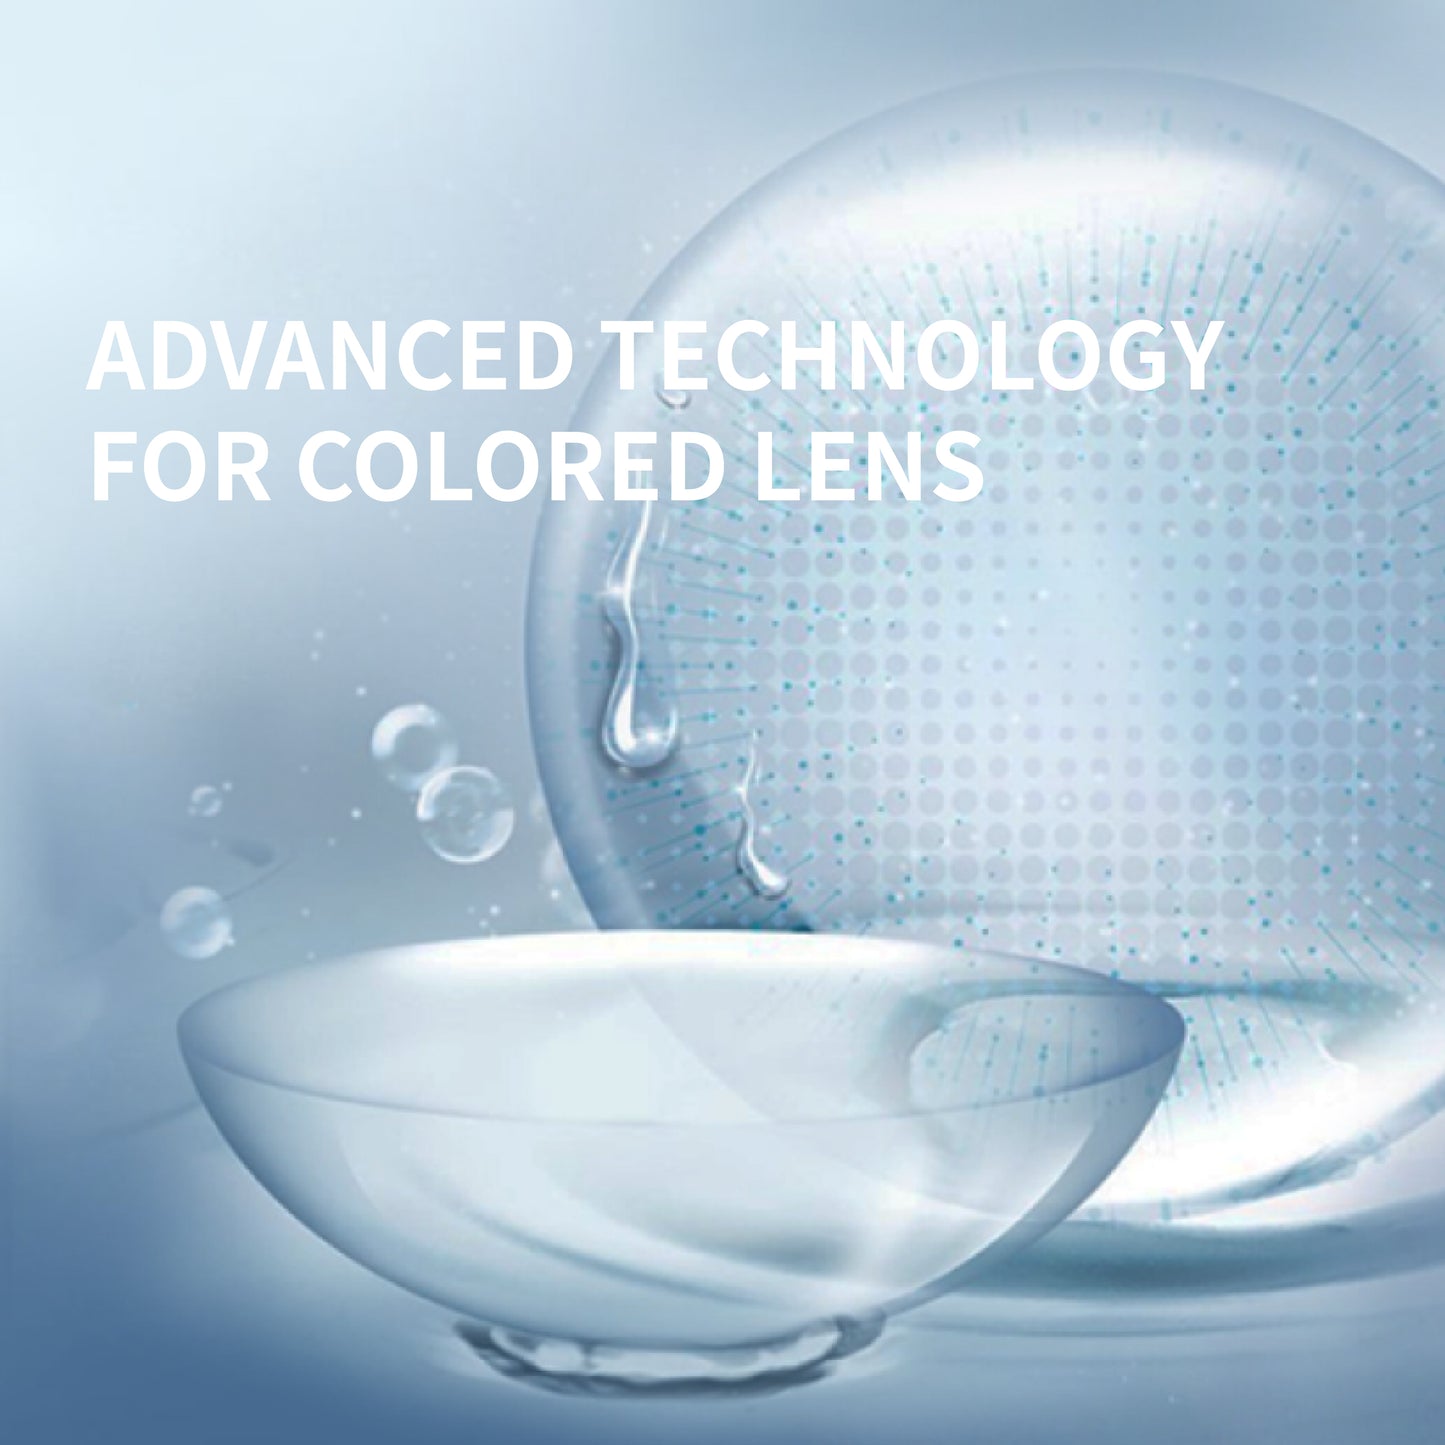 1Pcs FDA Certificate Eyes Colorful Contact Lenses - Gemstone grey